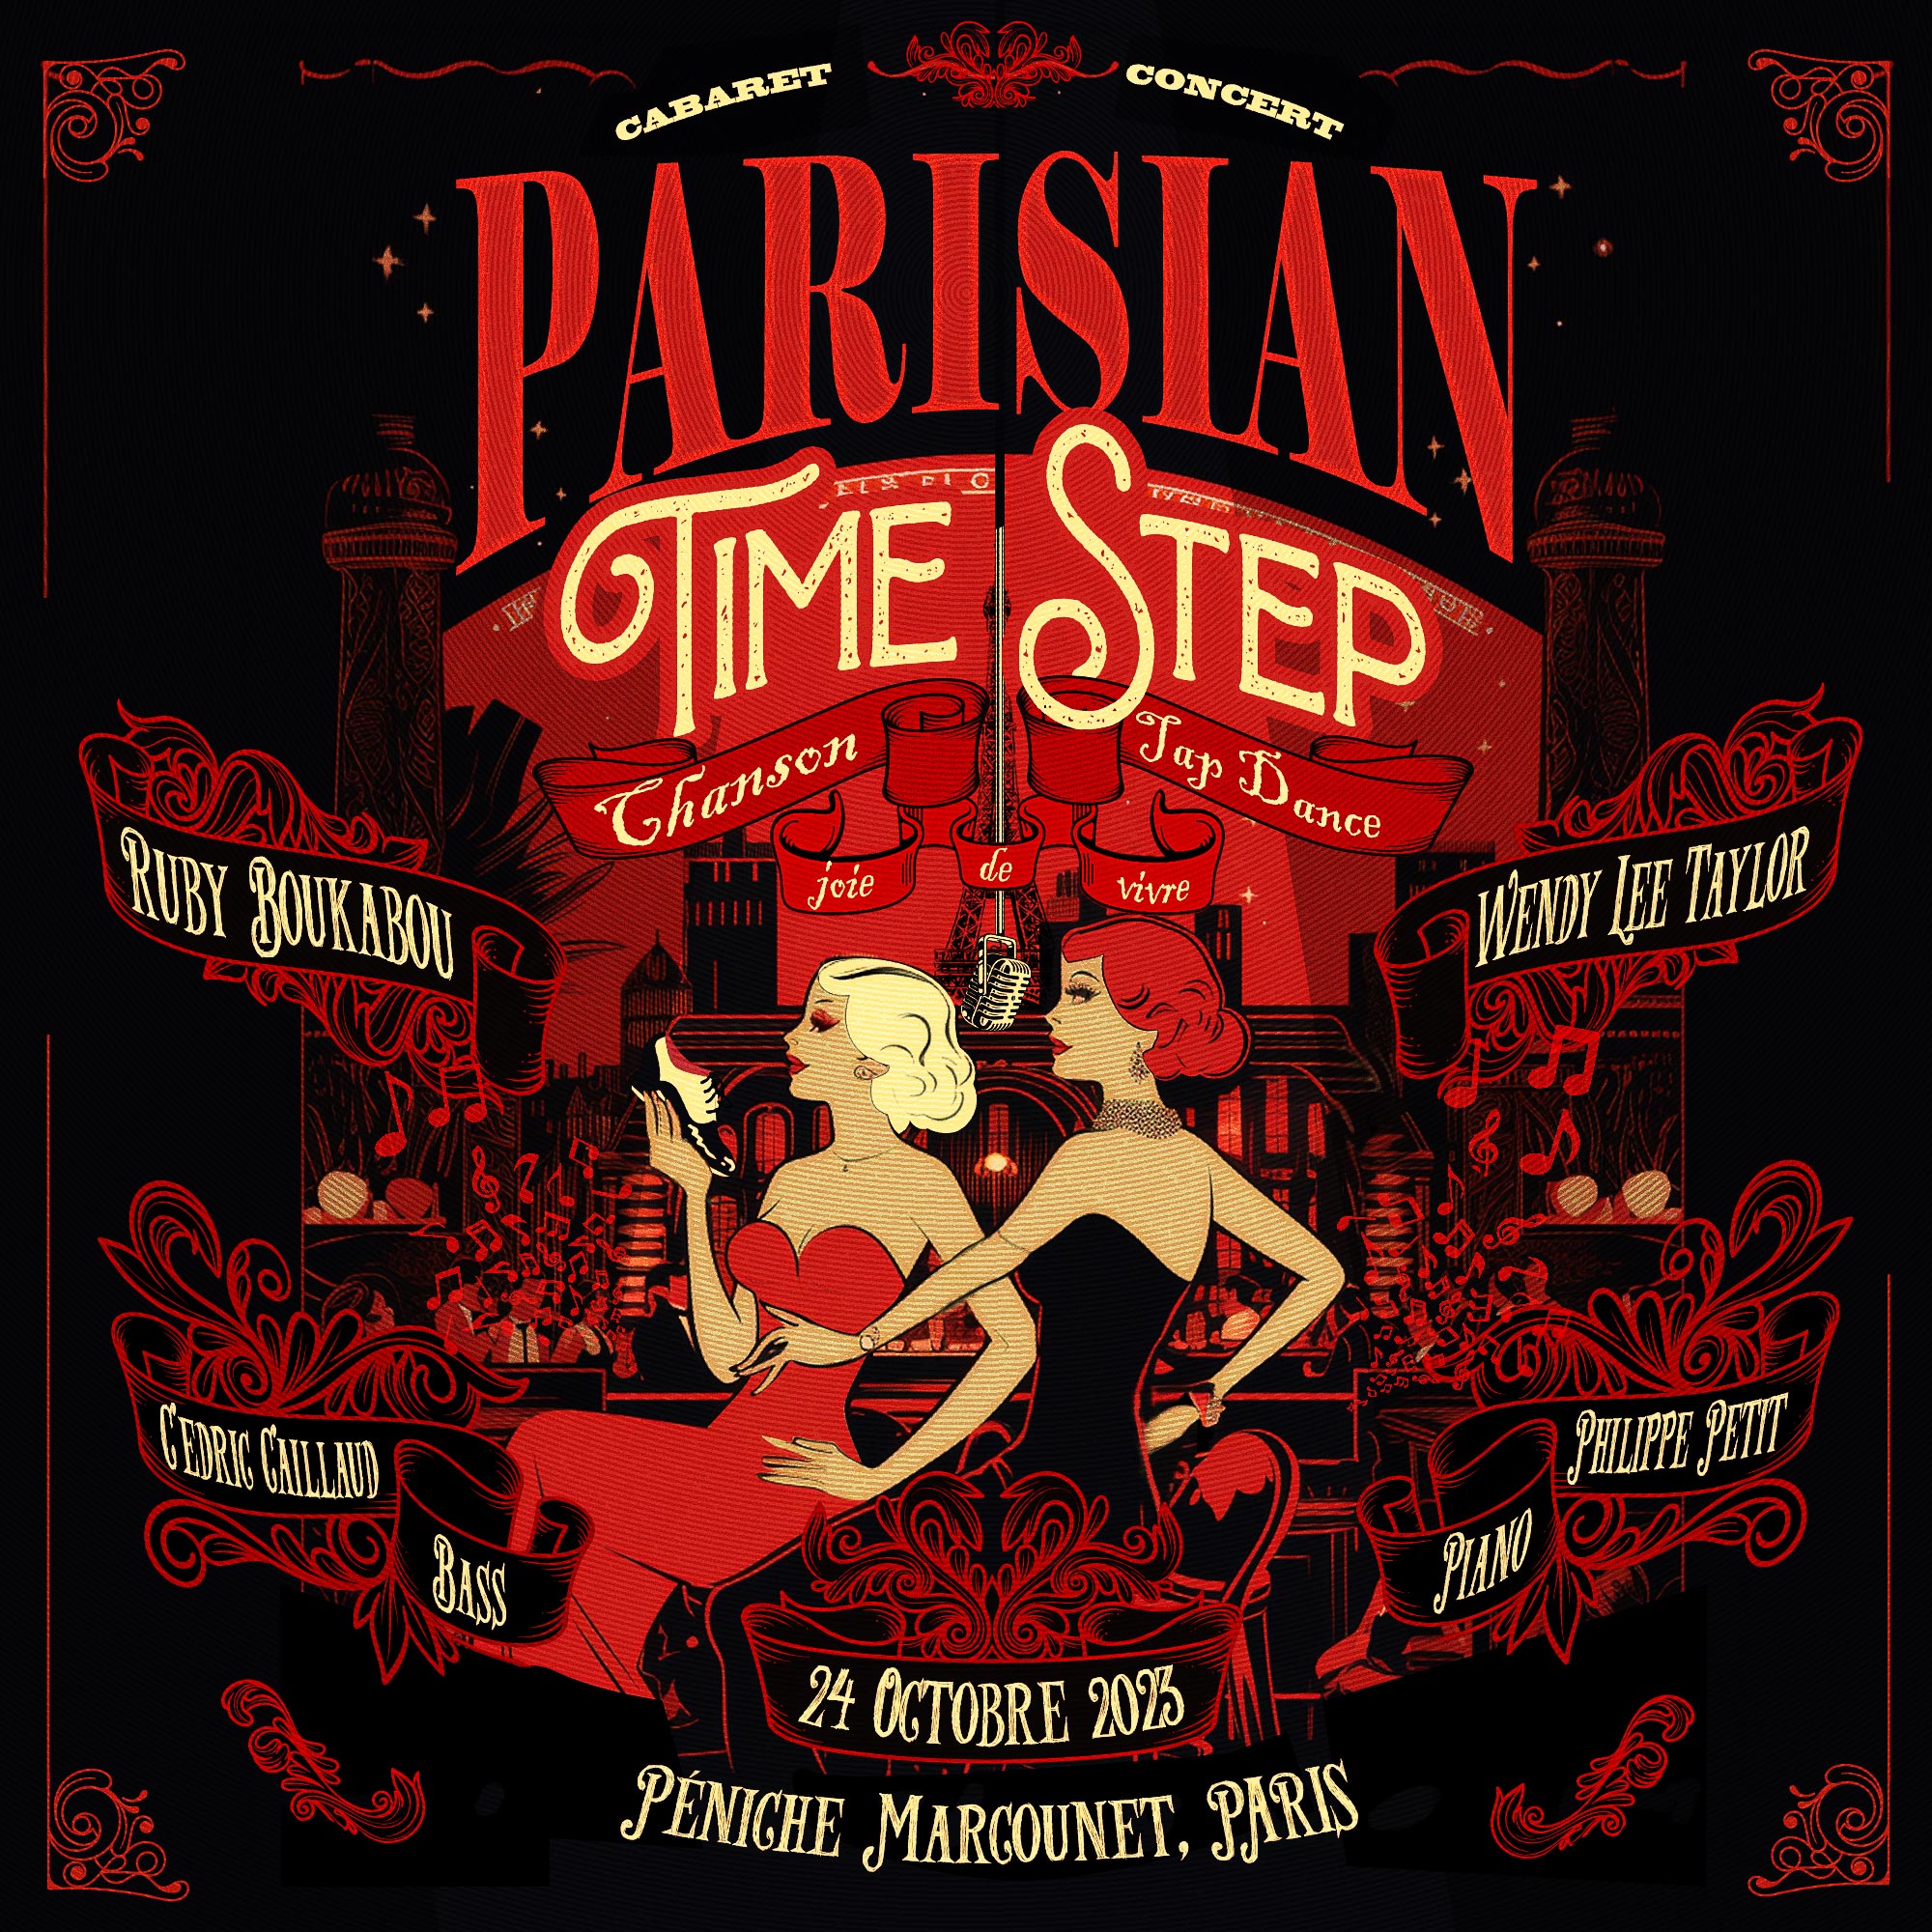 Parisian Time Step Poster